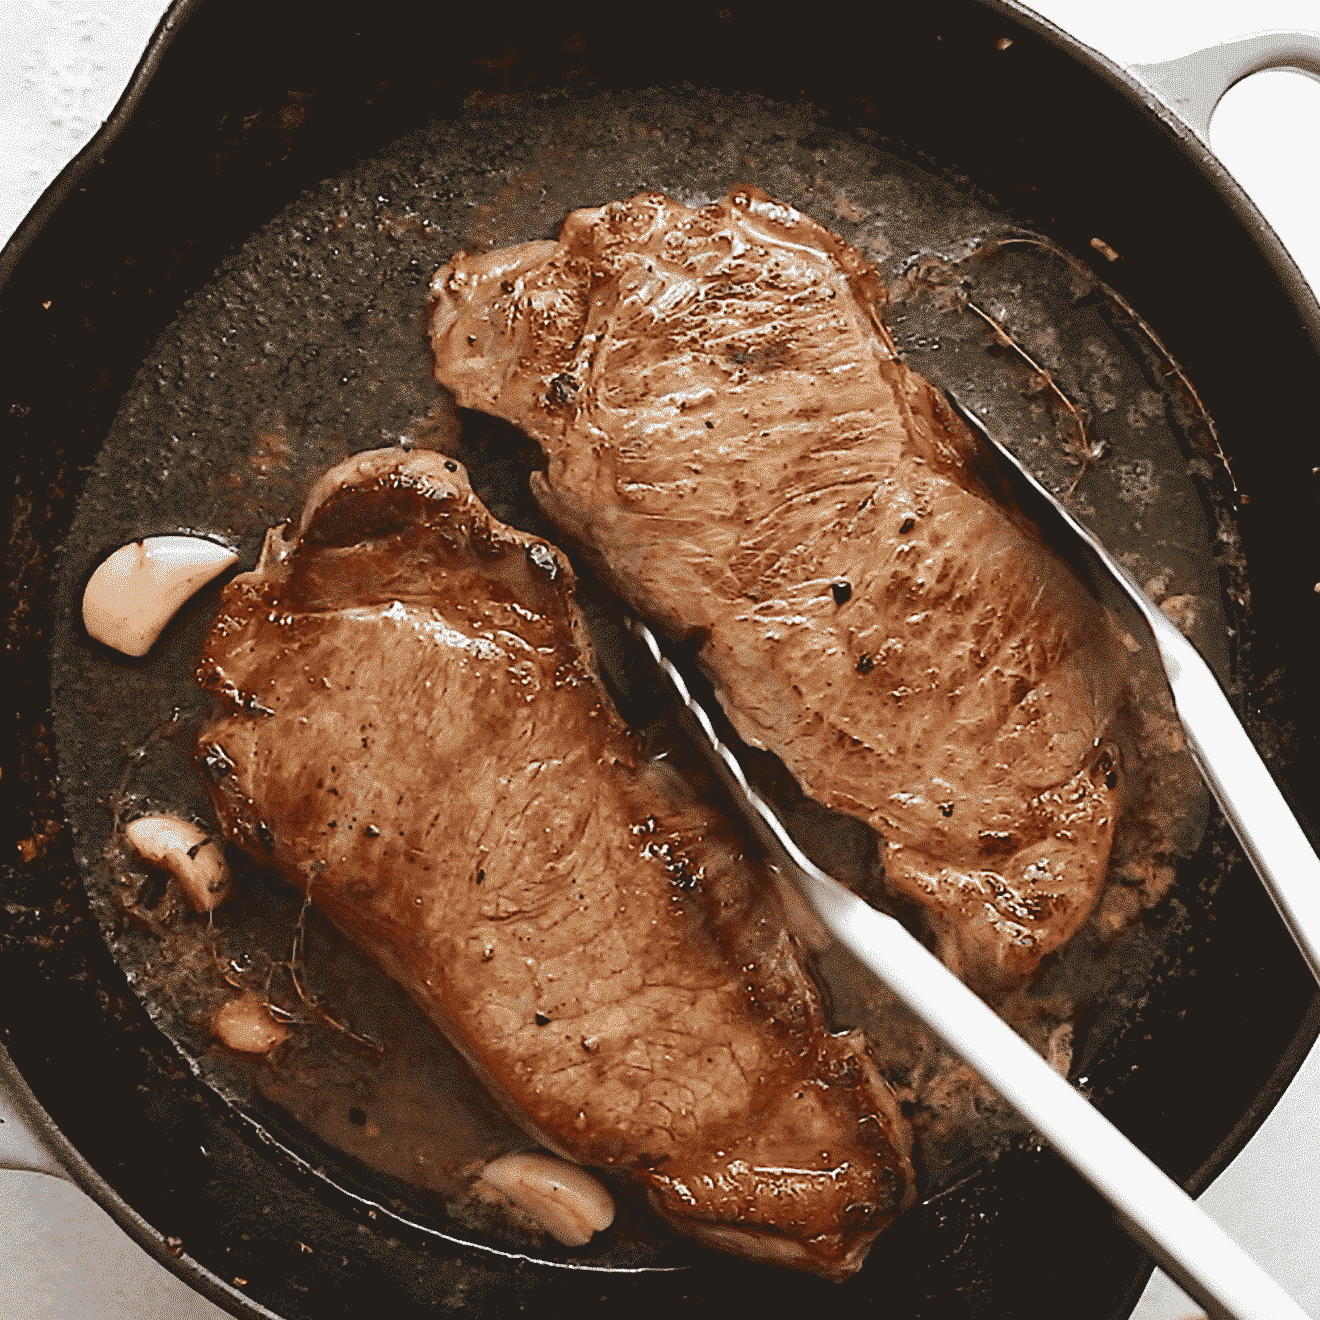 https://www.primaverakitchen.com/wp-content/uploads/2021/04/Pan-Seared-Steak-with-Mushrooms5.png